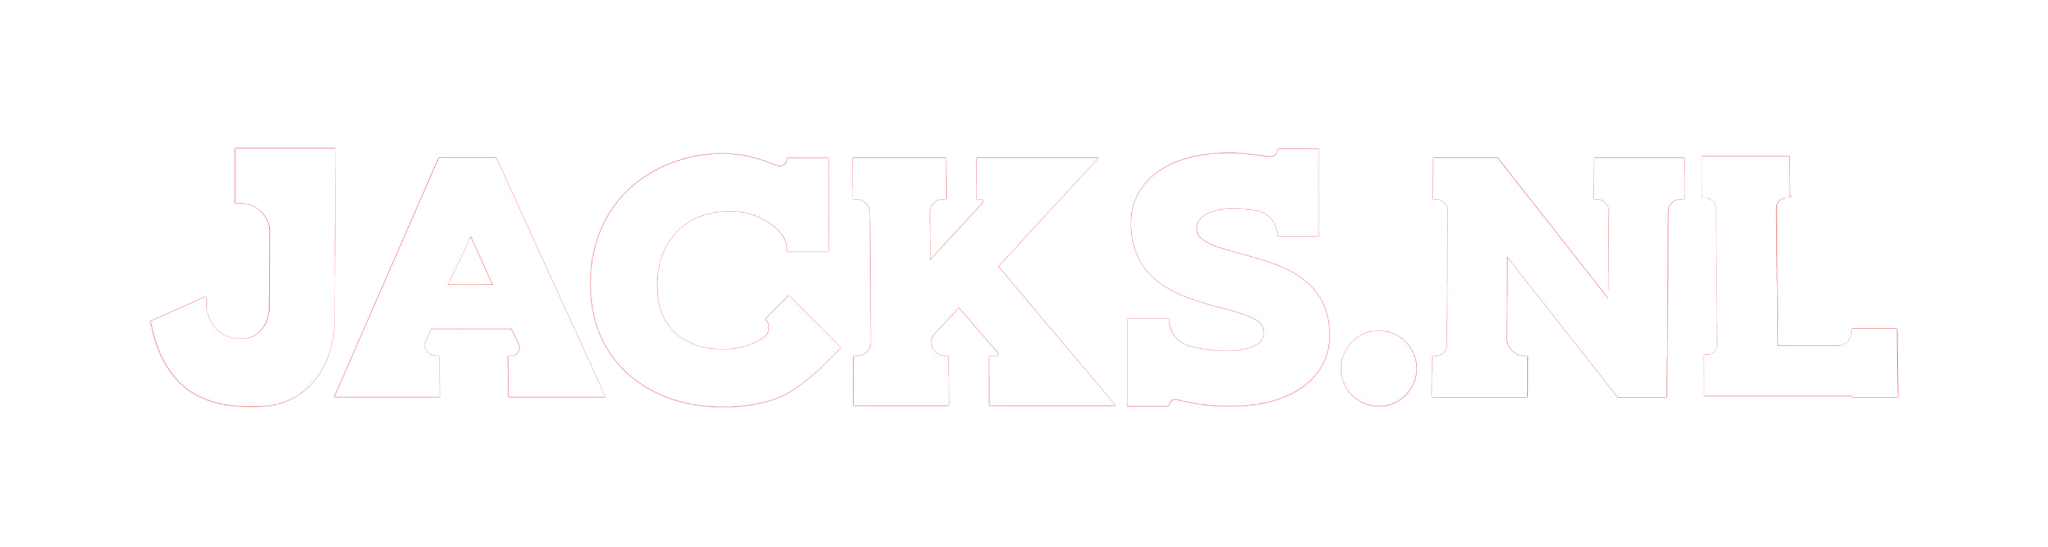 Jacks.nl logo wit